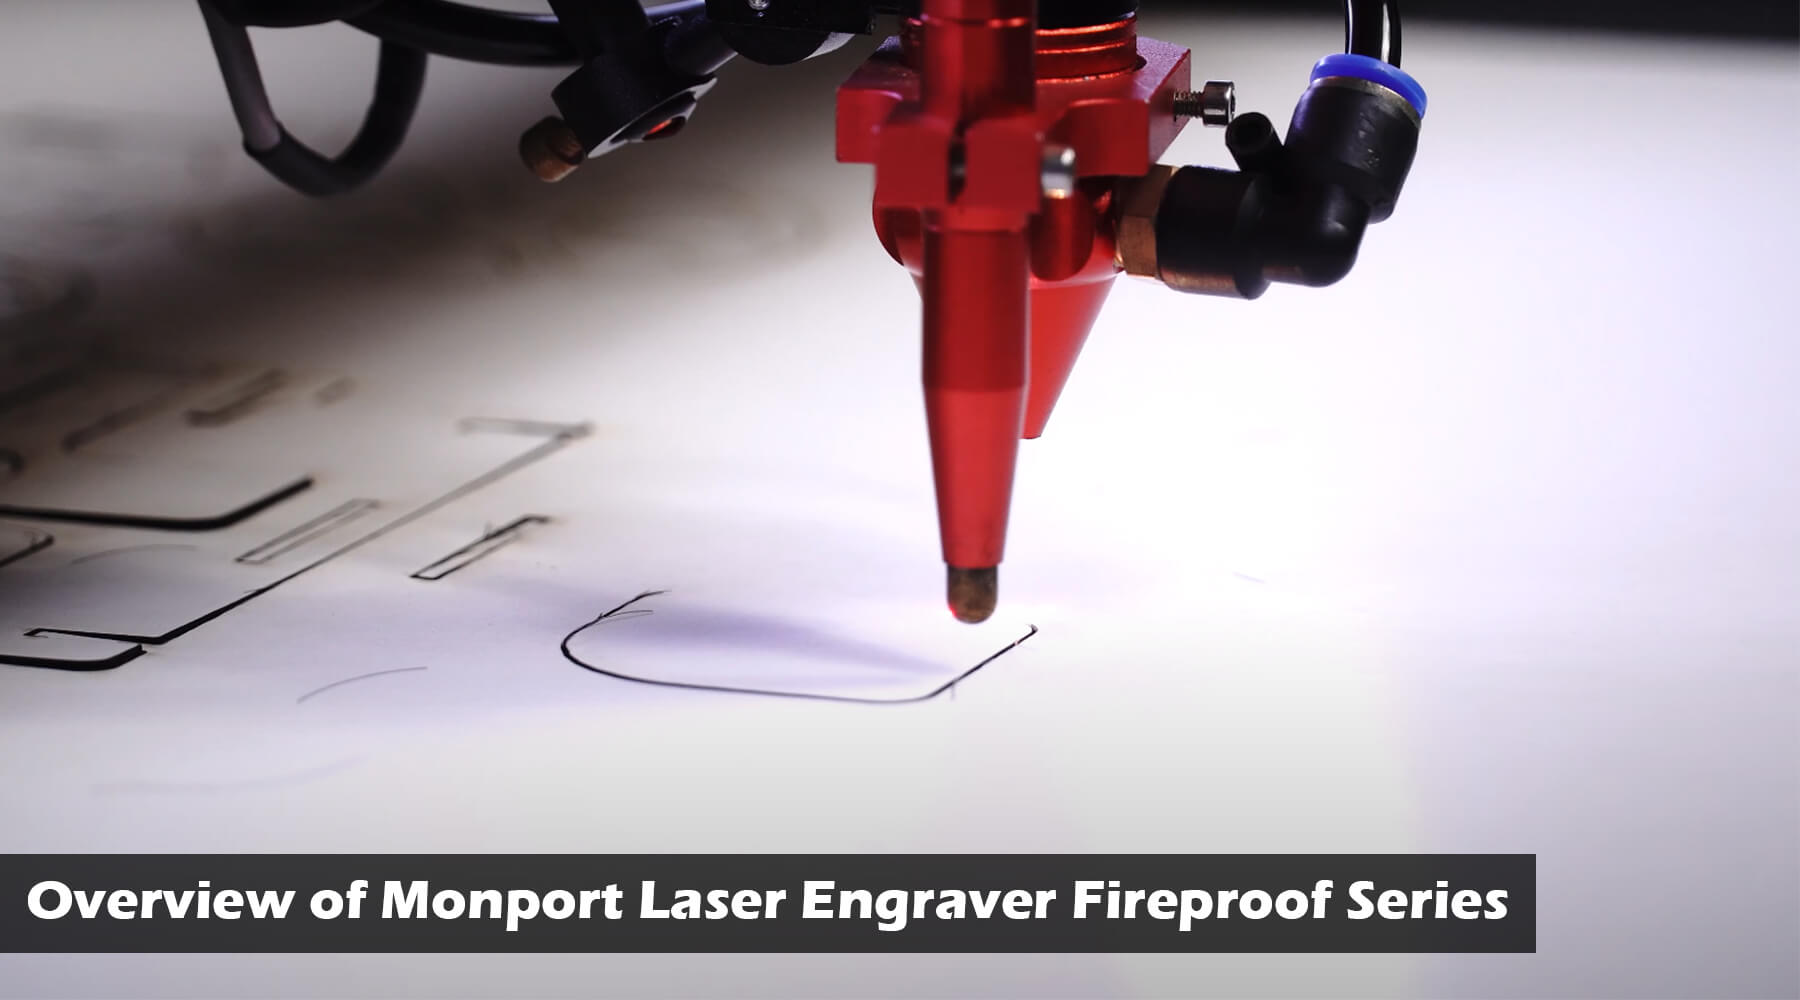 Overview of Monport Laser Engraver Fireproof Series